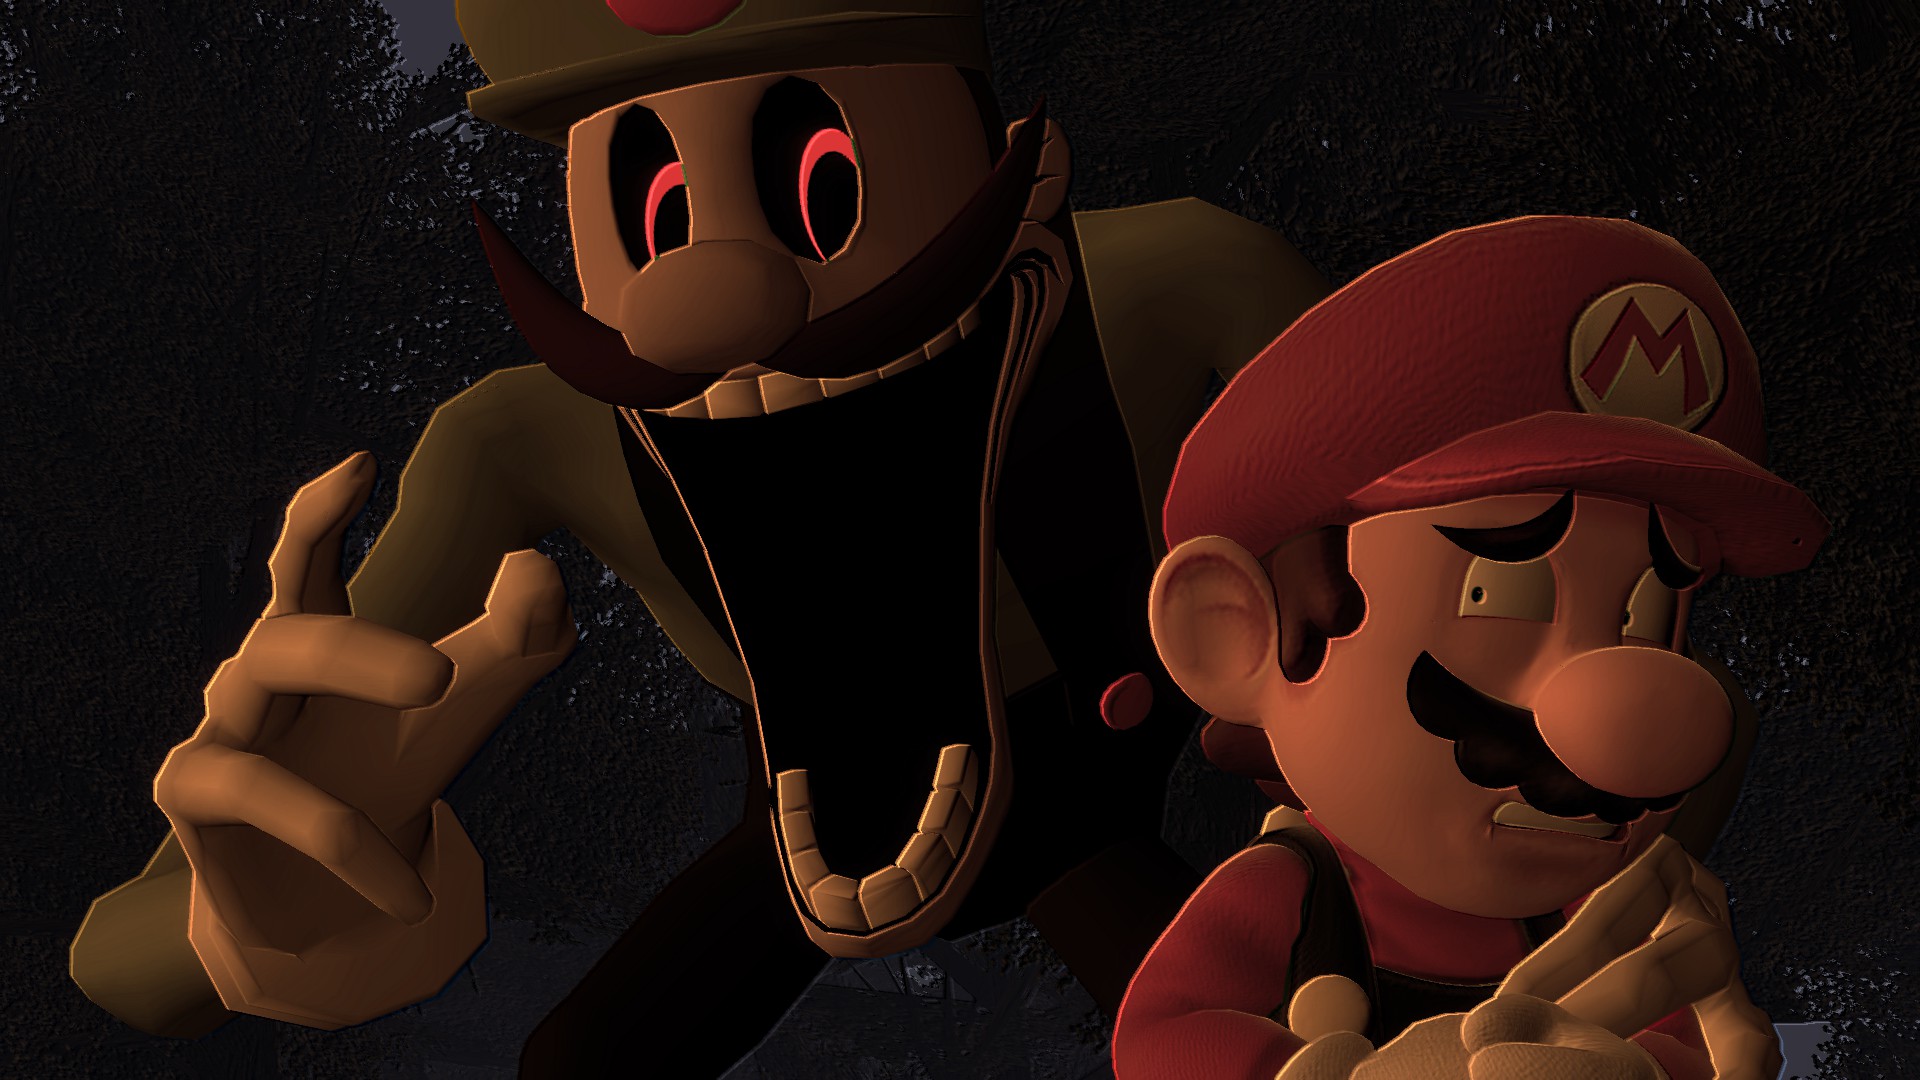 Mr L creeping up on Mario.